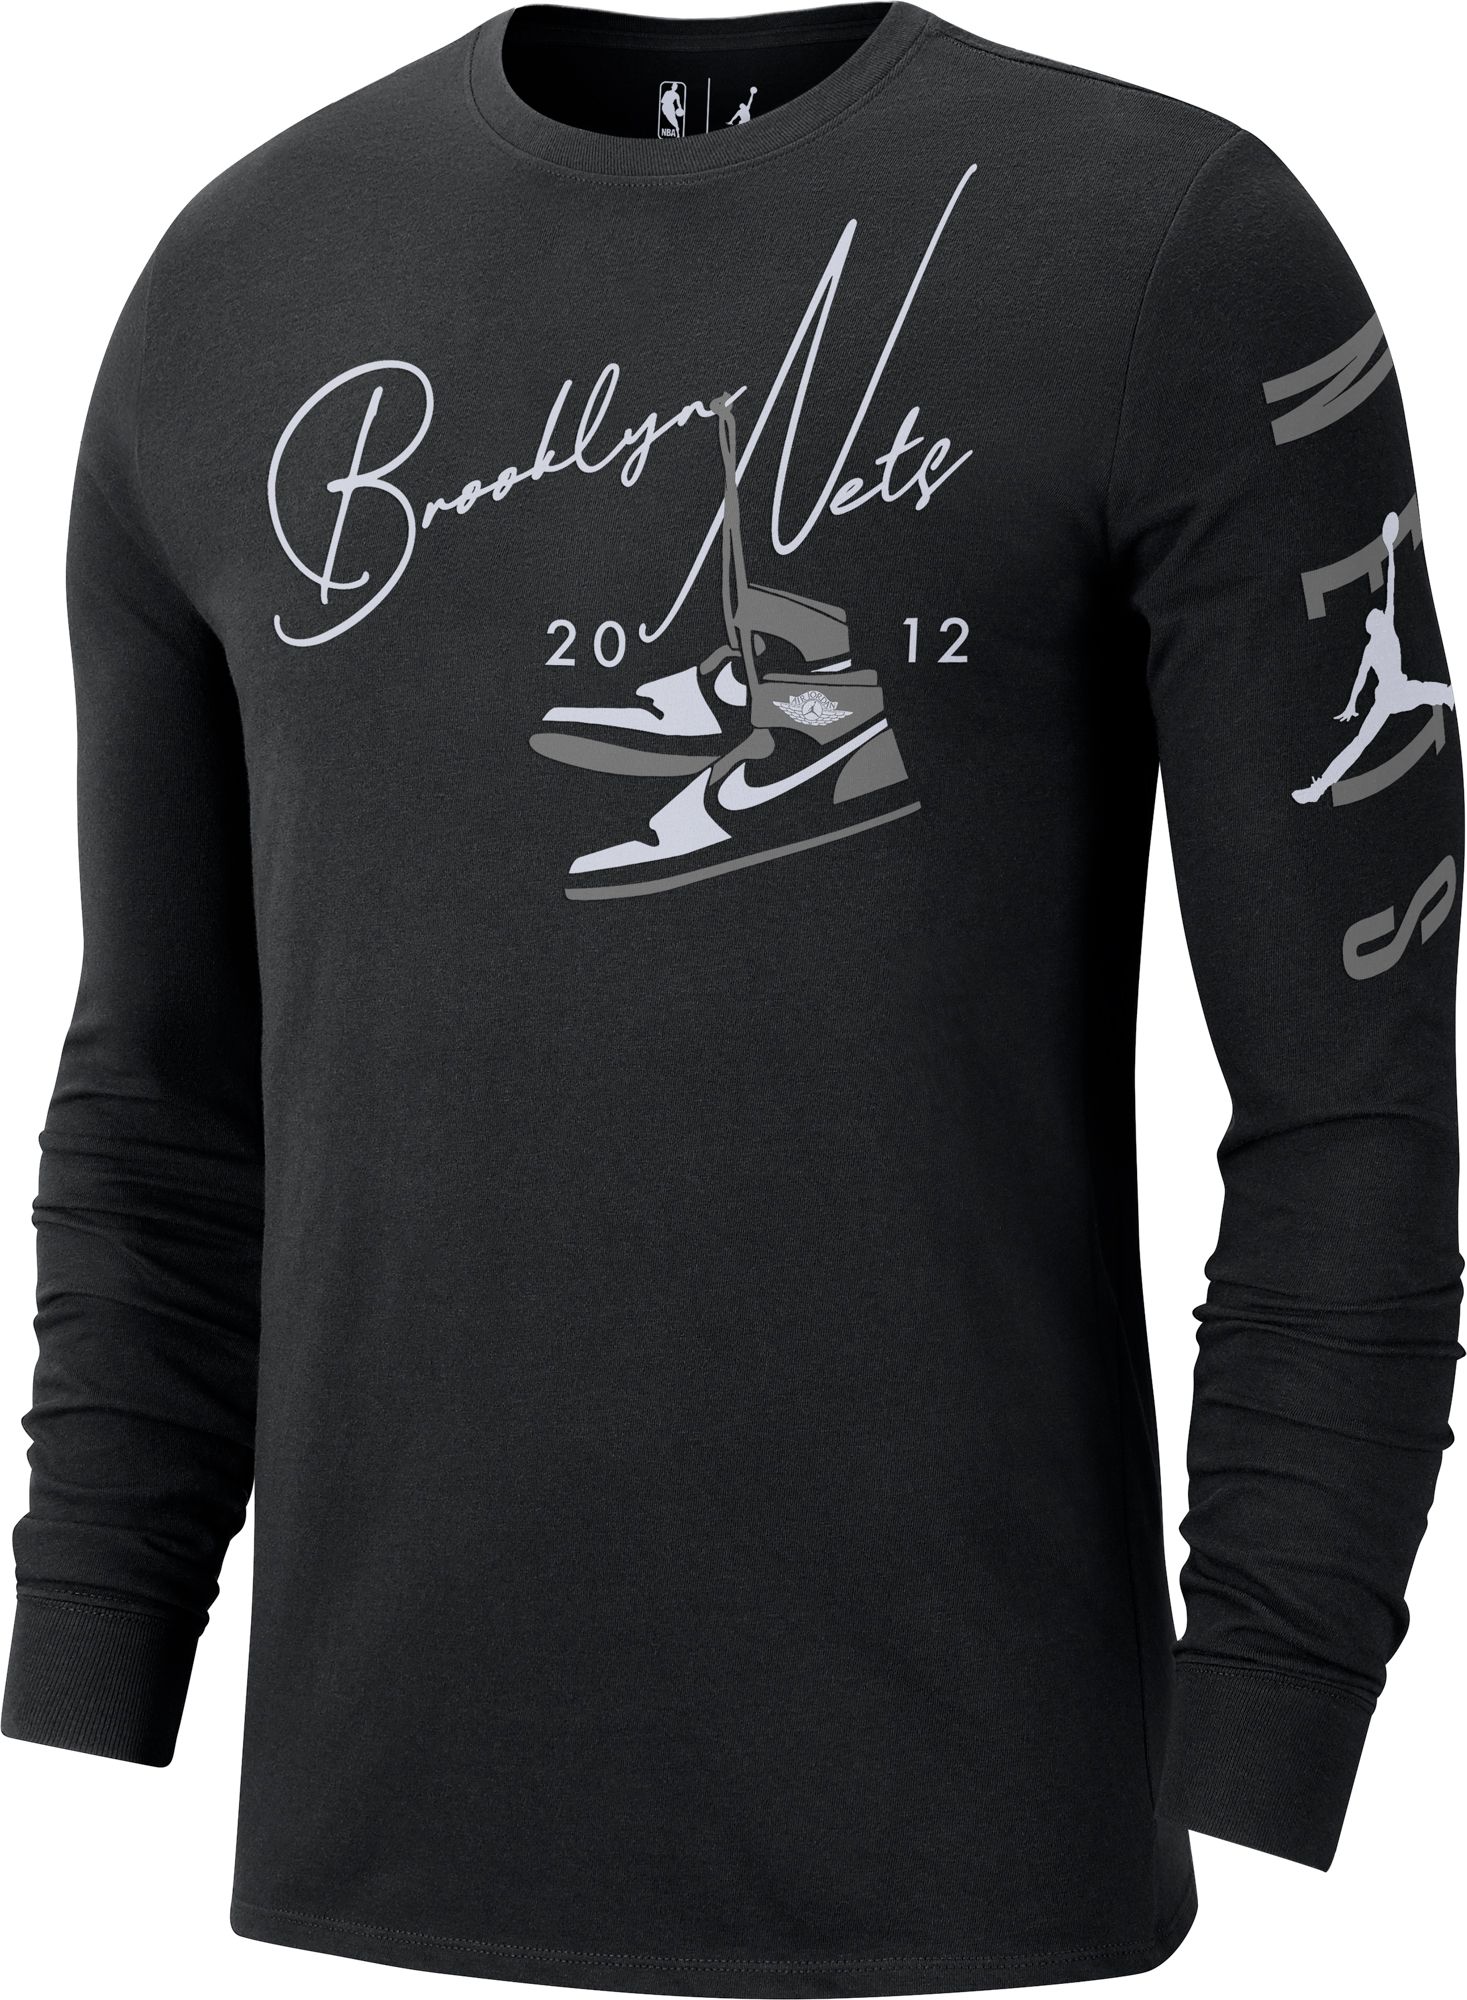 Nike Men's Gray Ucla Bruins Tri-blend Performance Long Sleeve